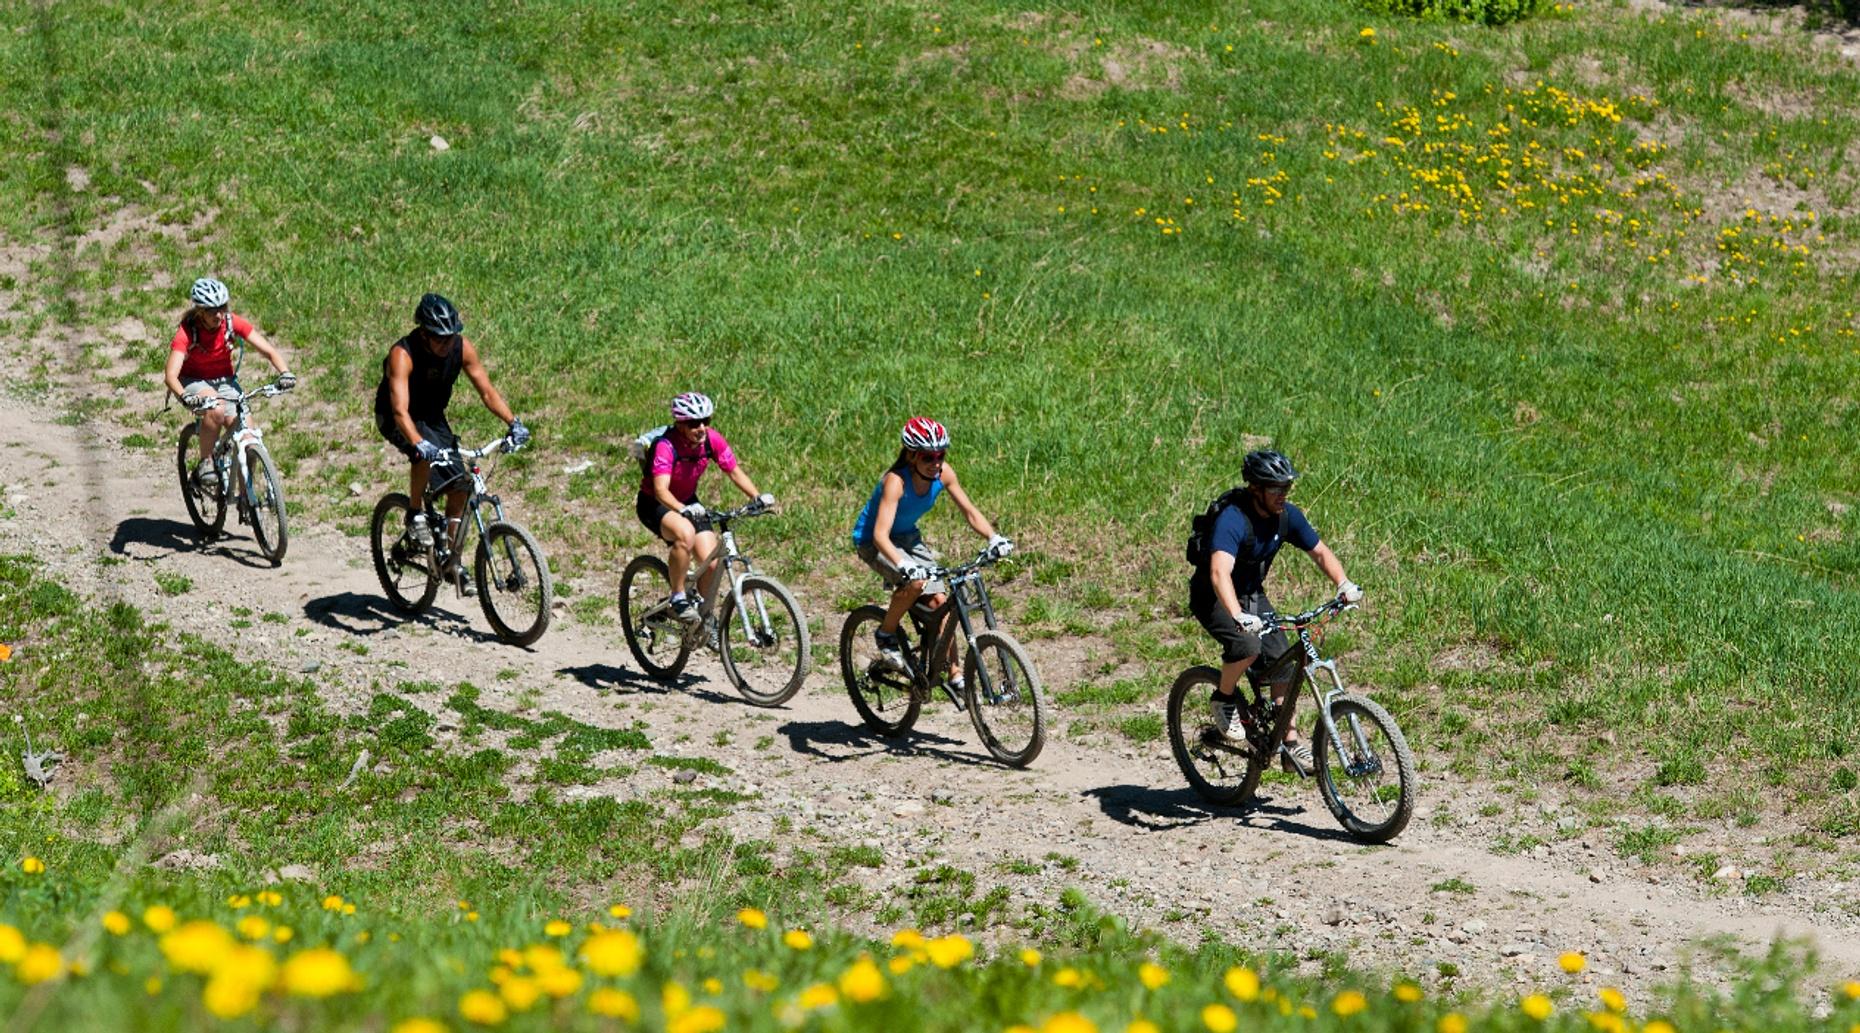 Private Group Biking Tour in Healdsburg